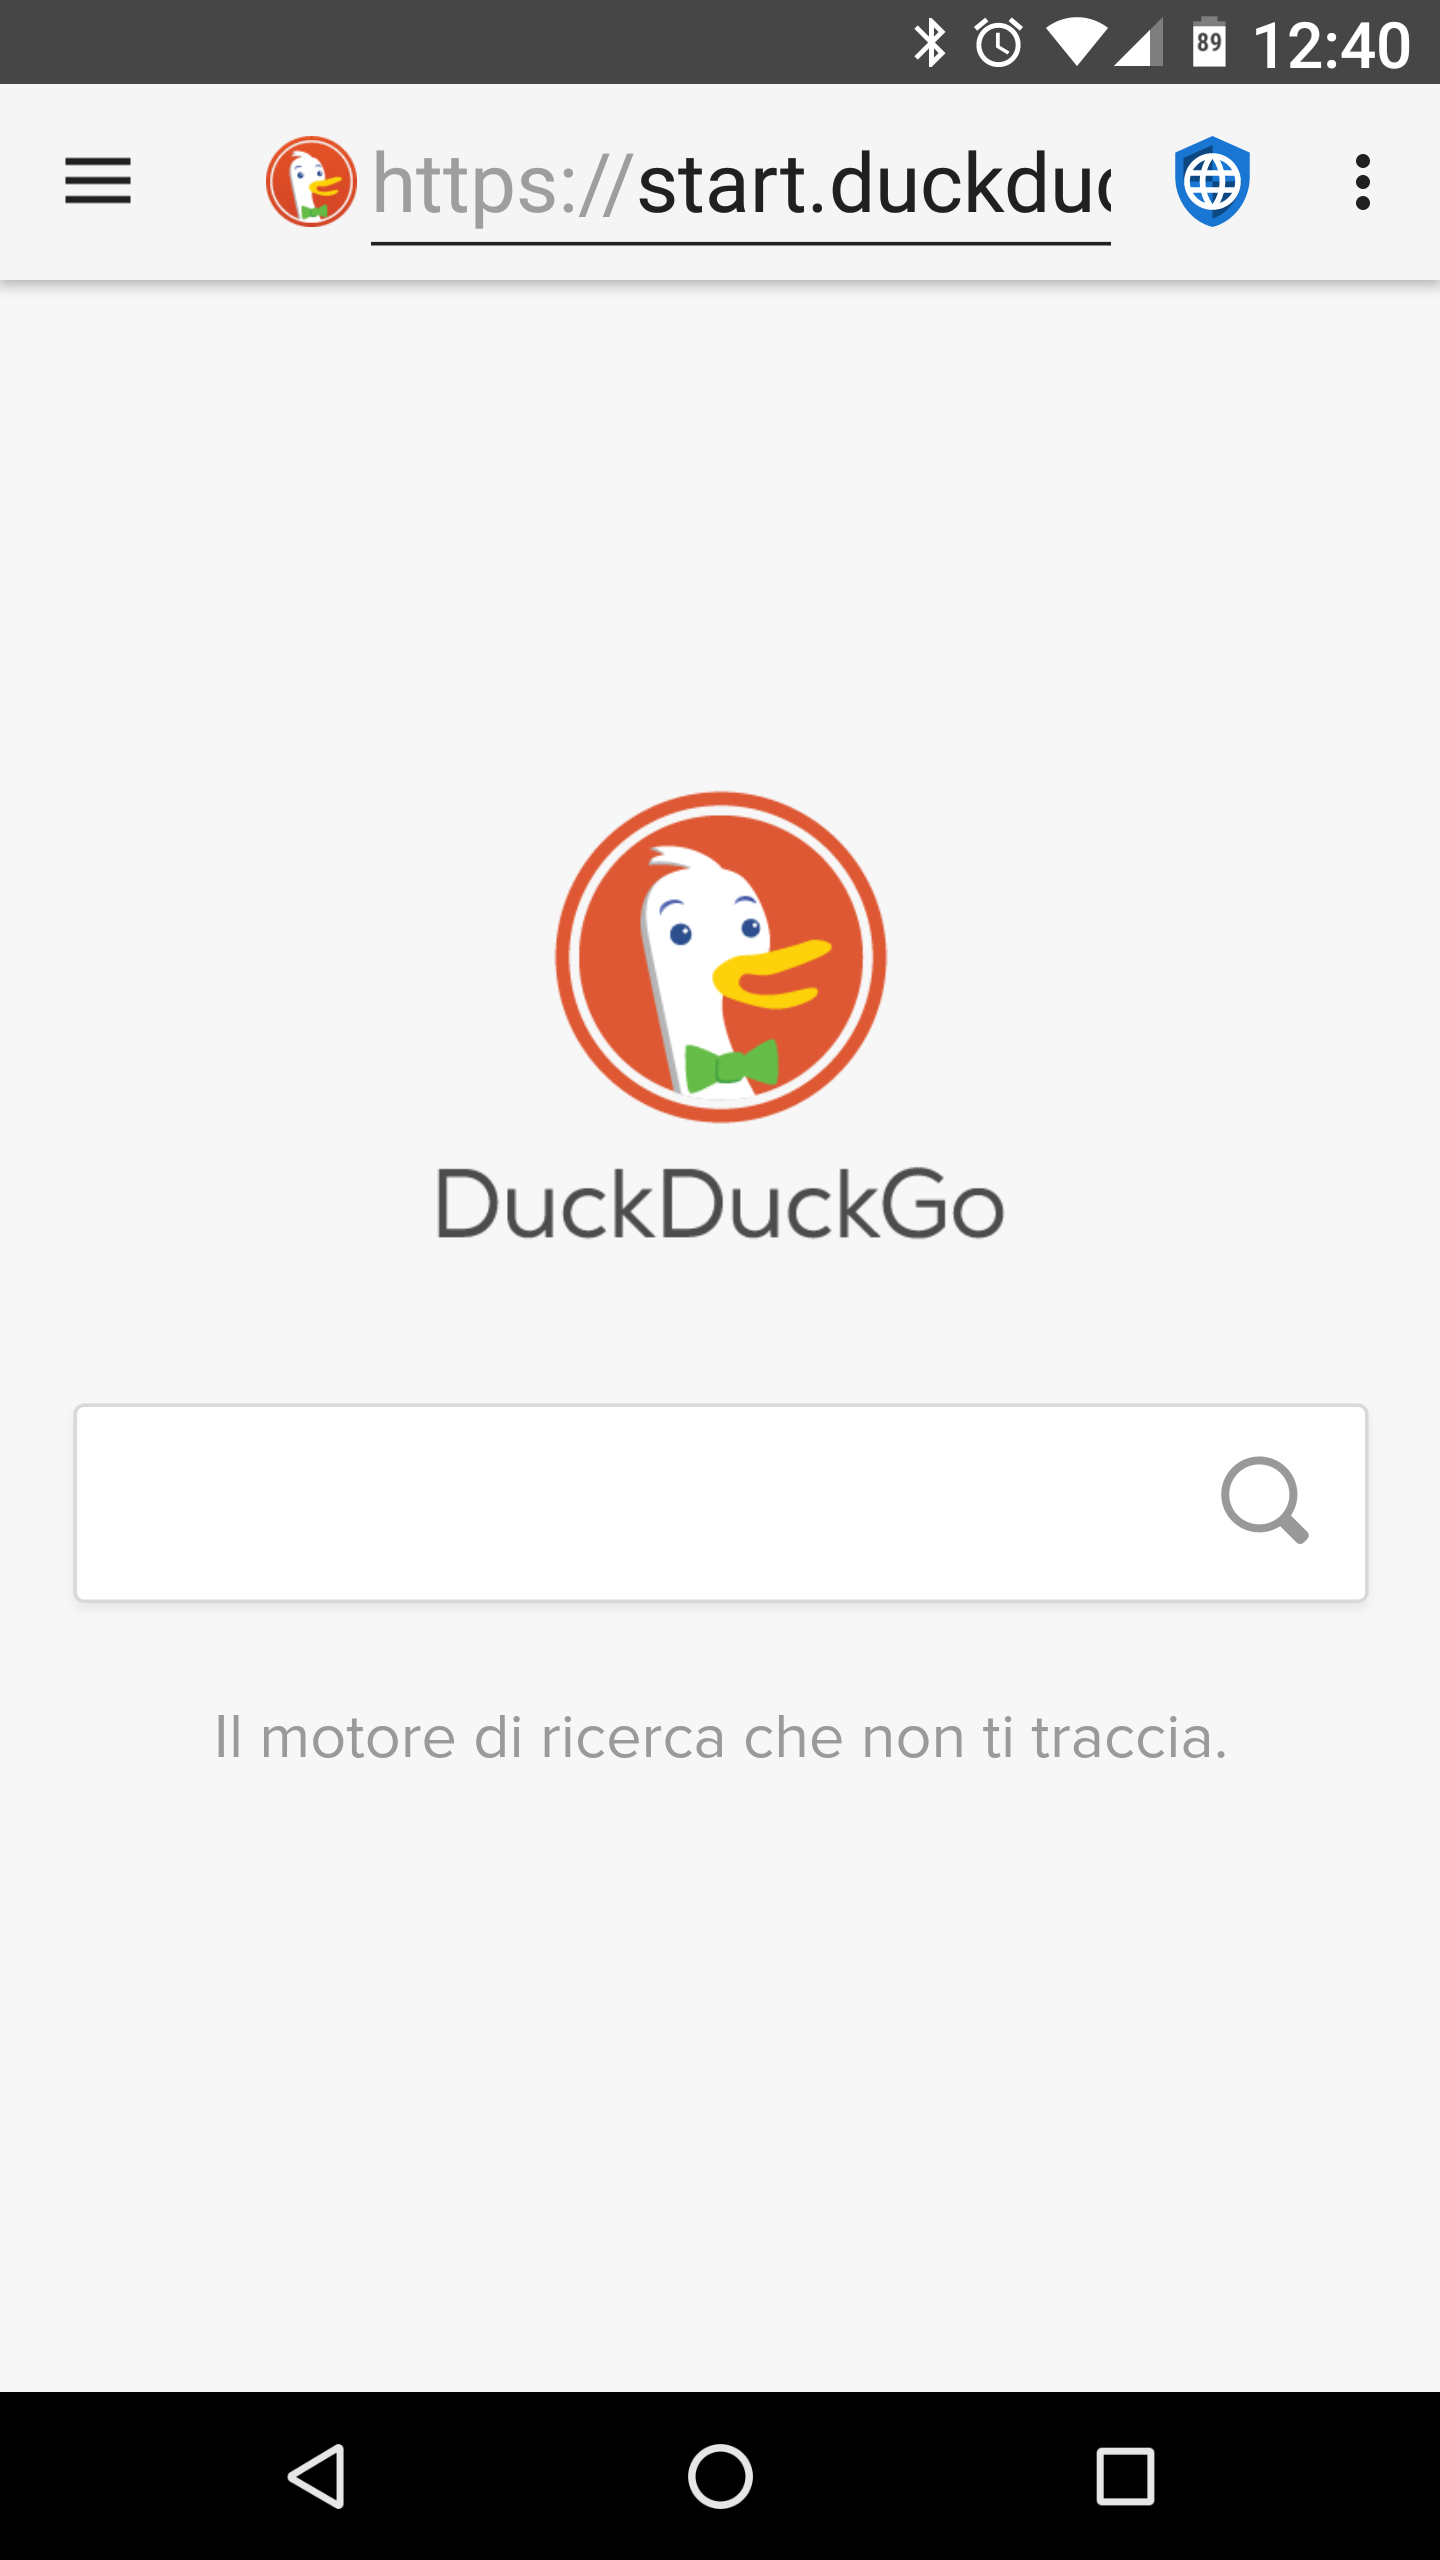 fastlane/metadata/android/it/images/phoneScreenshots/01-DuckDuckGo.png